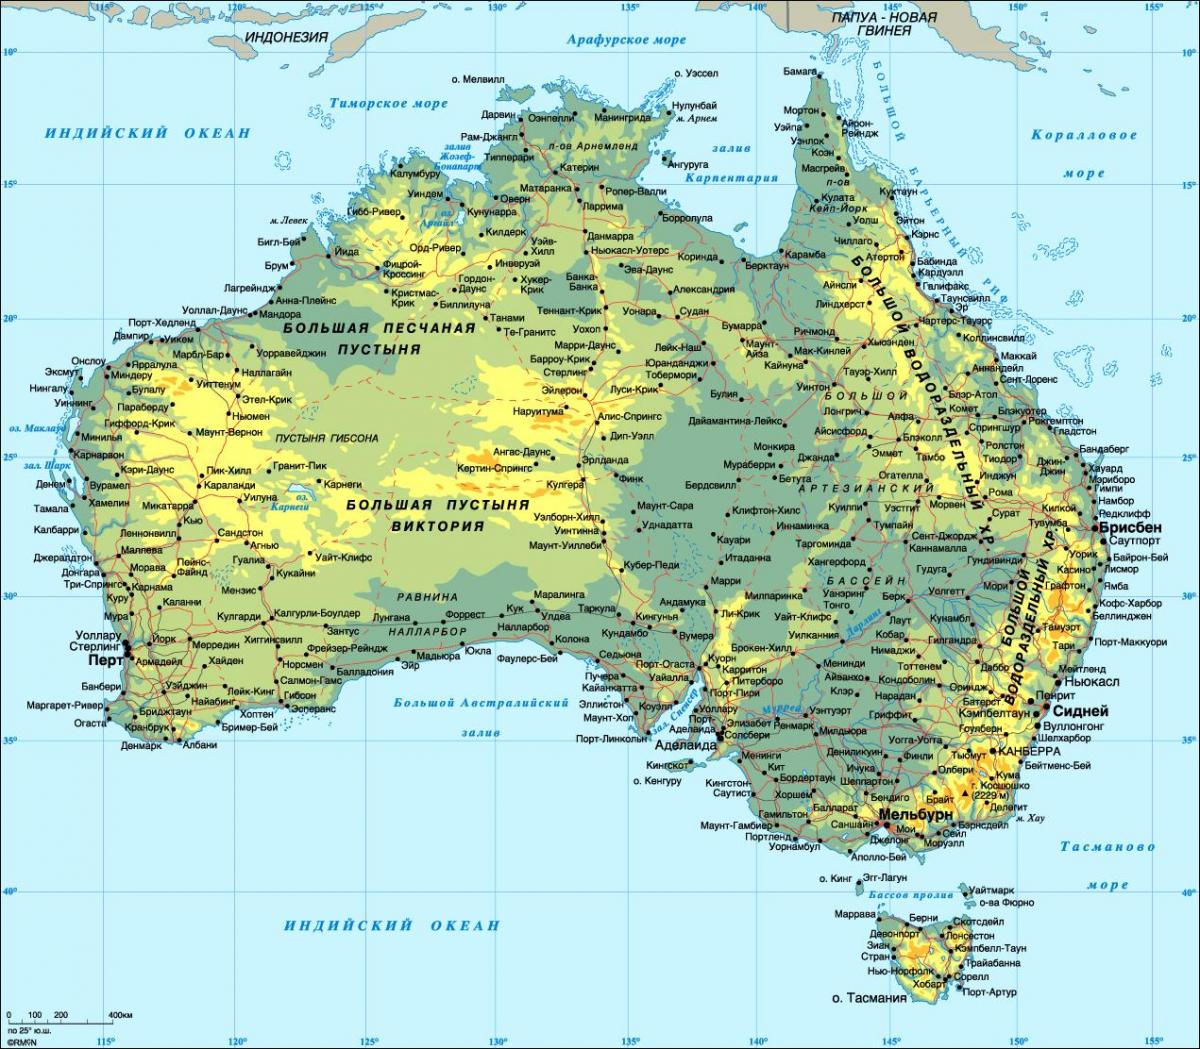 Australia detailed map